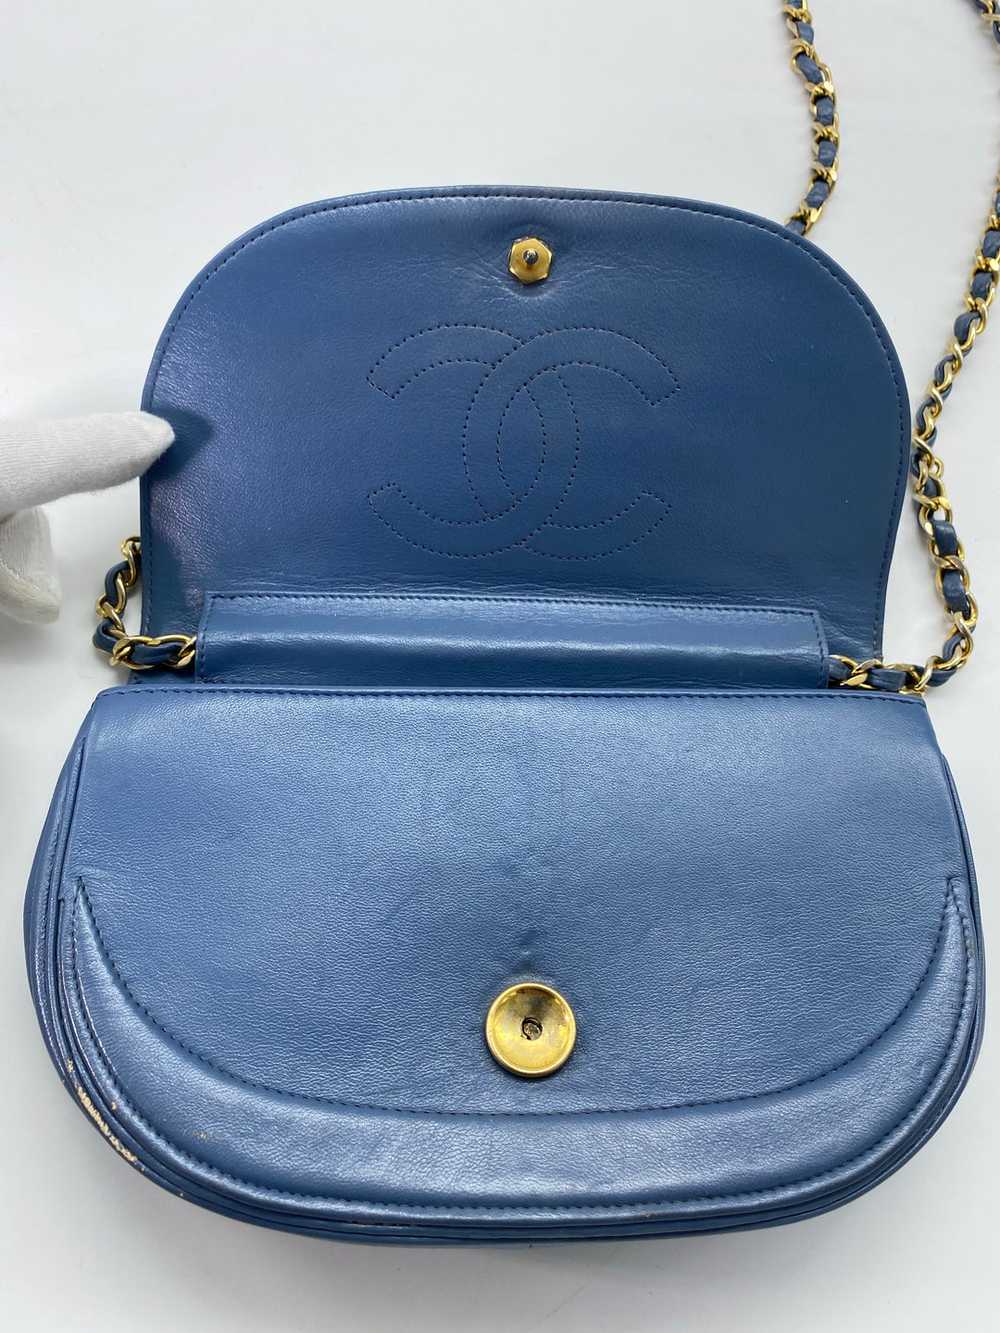 Chanel Blue Lambskin Flap Bag - image 4